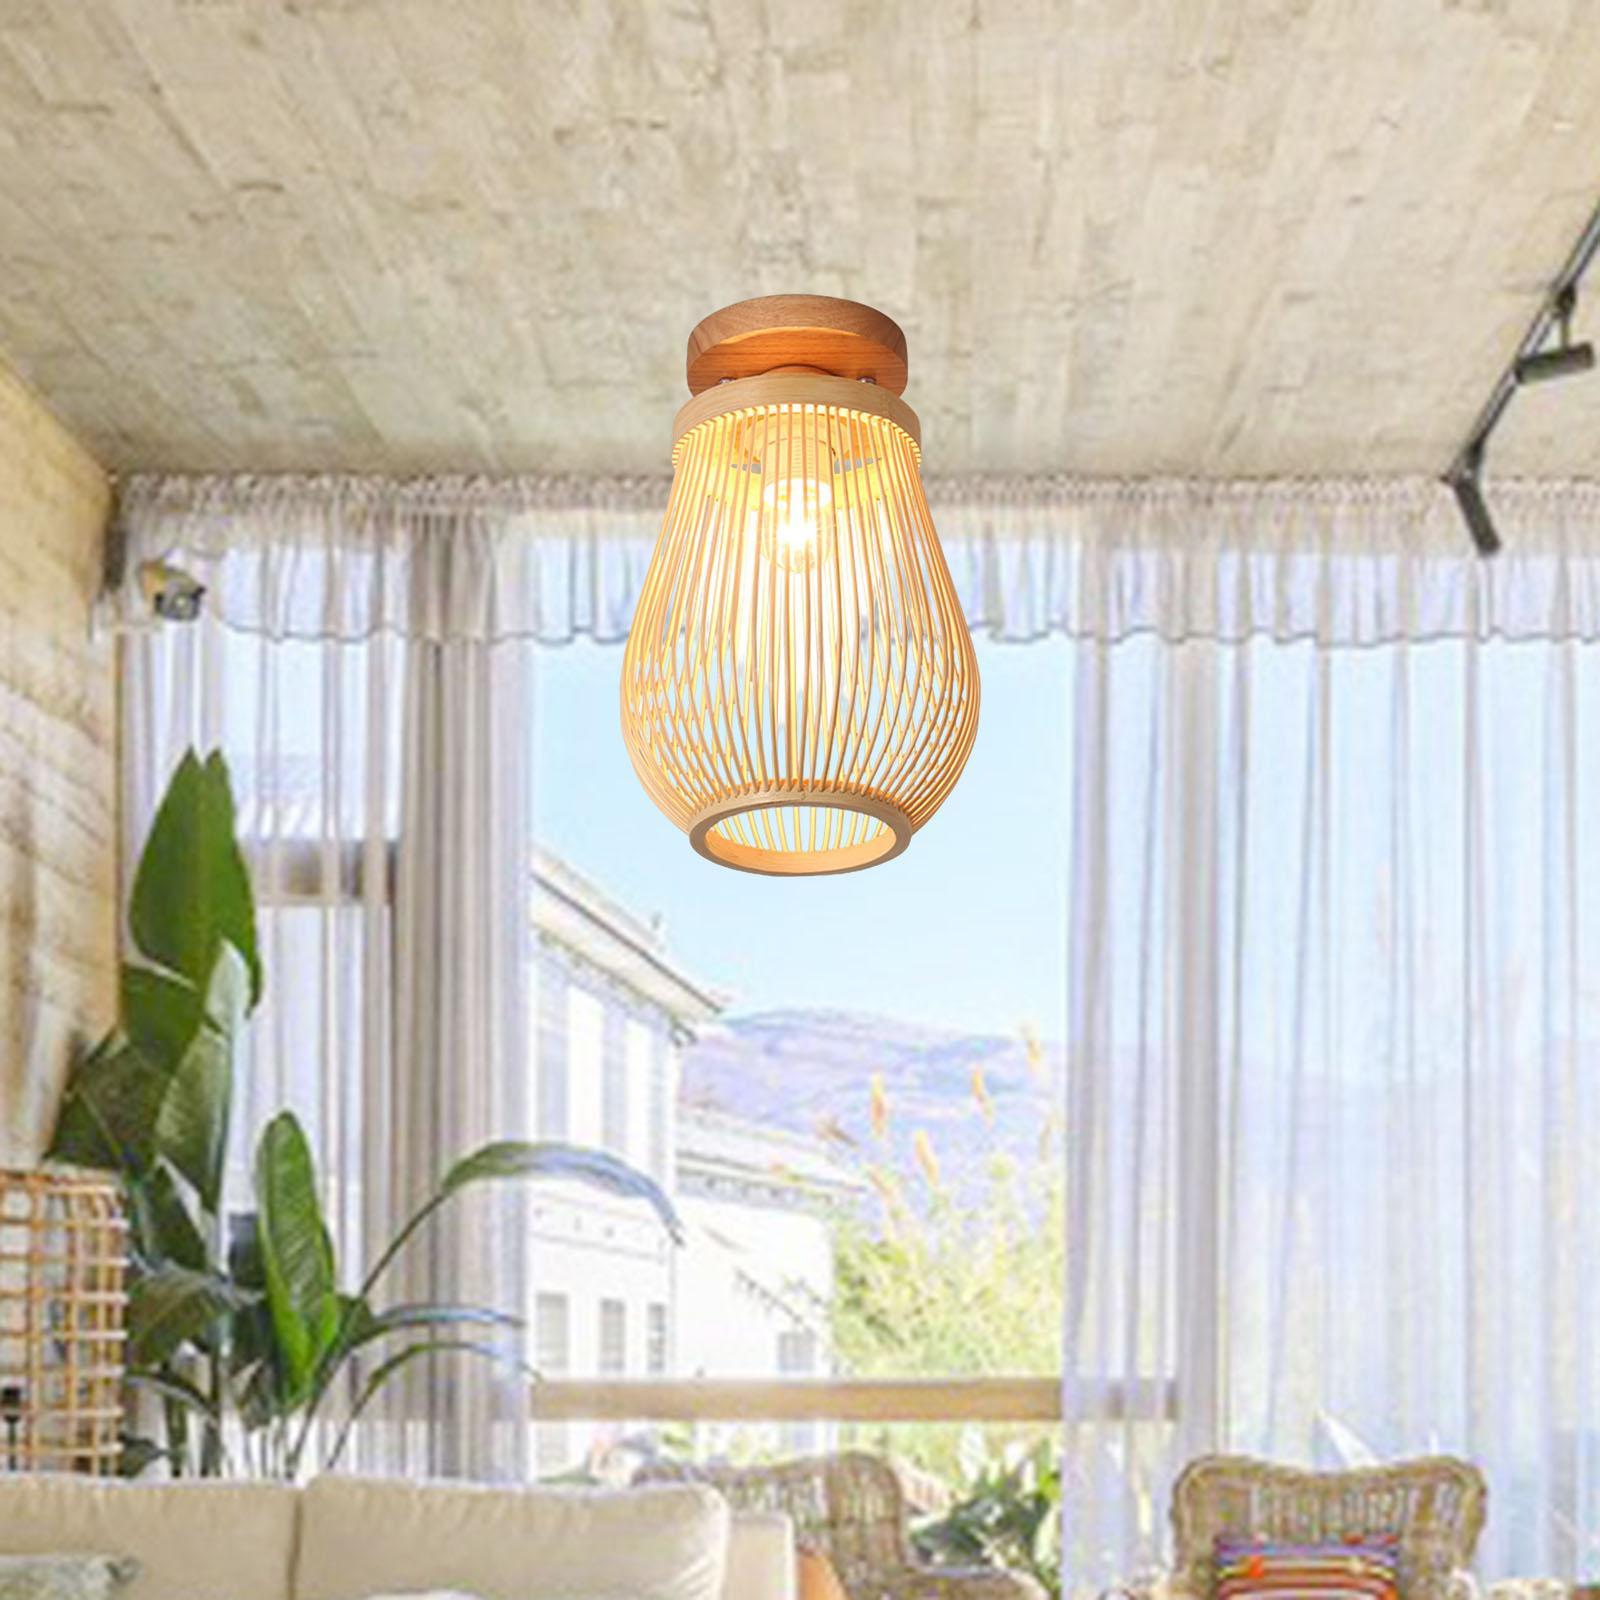 Bamboo Wicker Lantern Lampshade Ceiling Light Fixture Fixture Kitchen